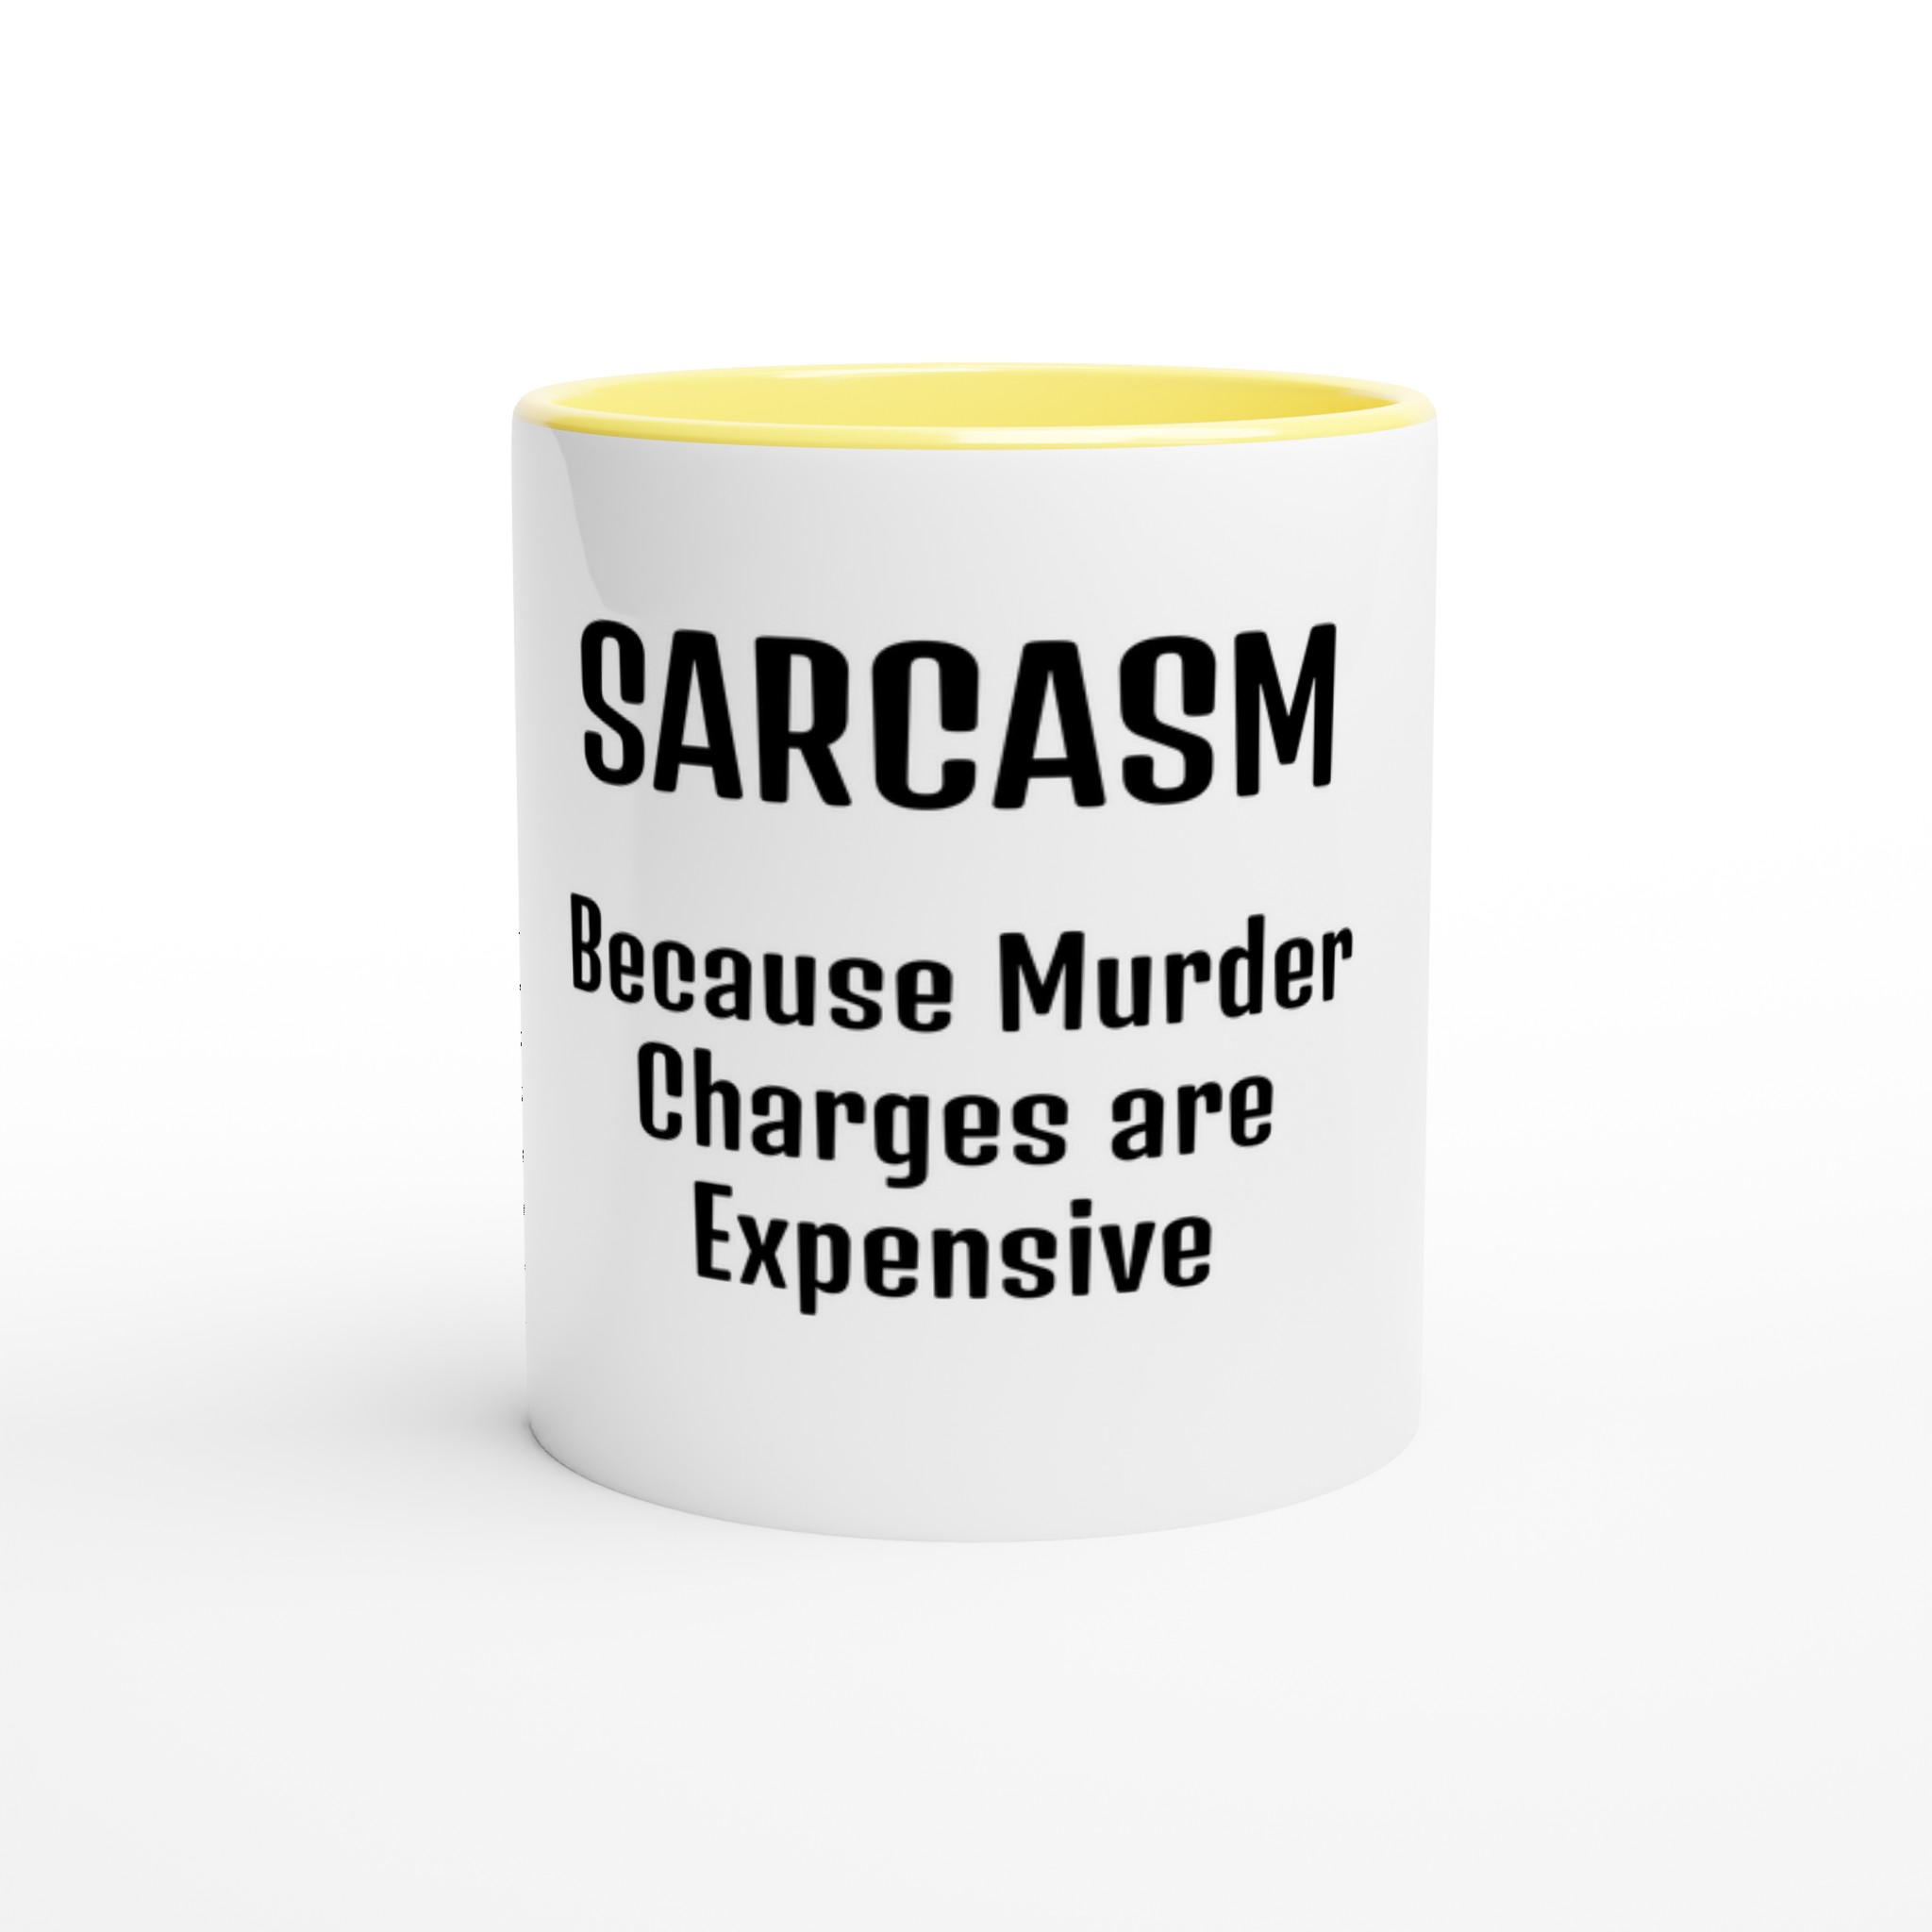 Sarcasm mug yellow